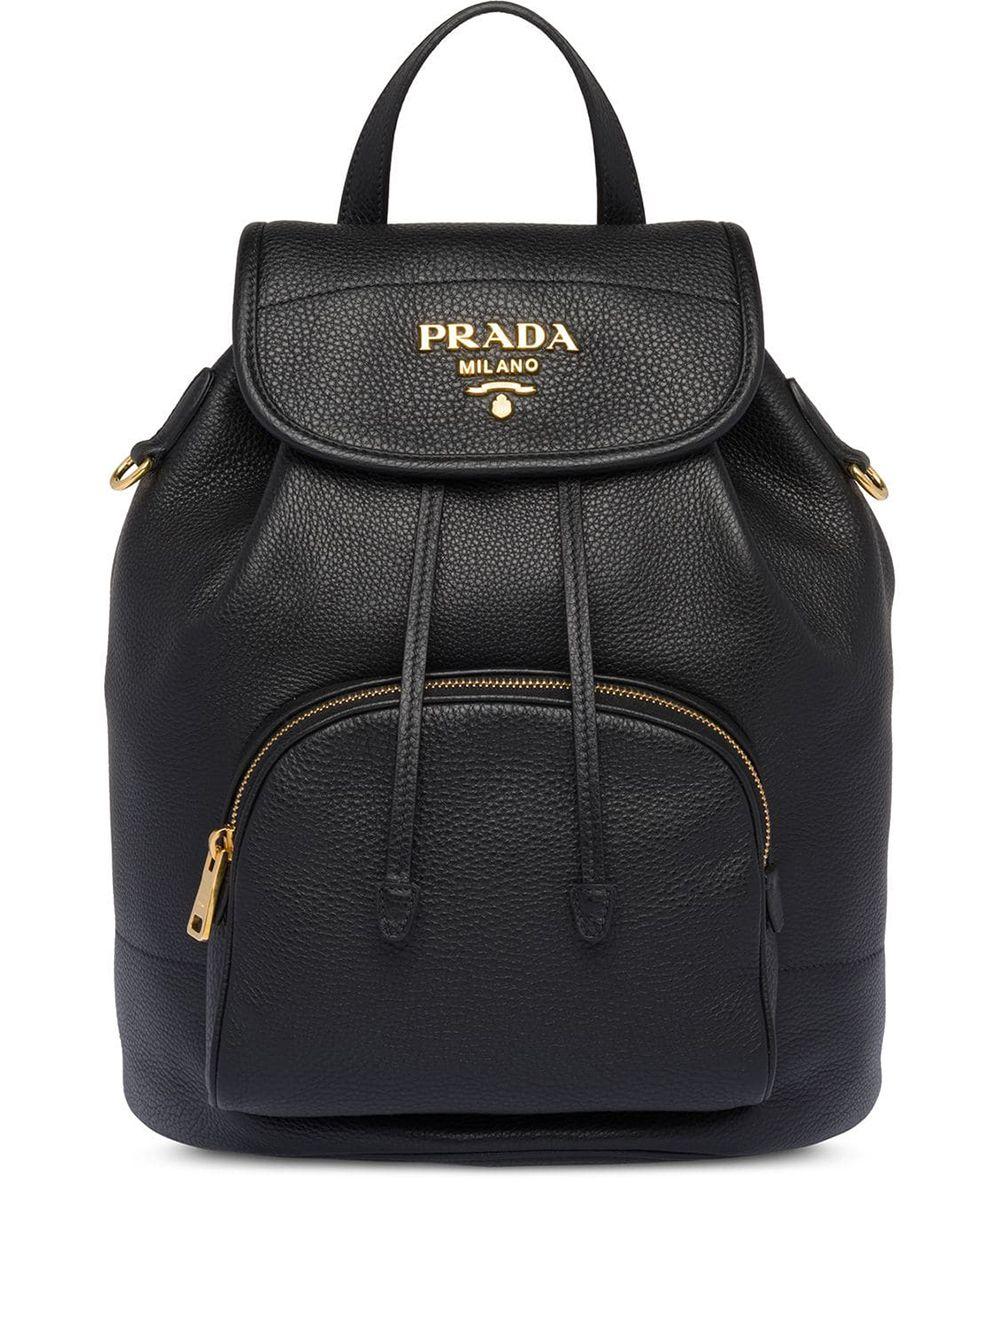 Prada Leather Backpack in Black | Lyst